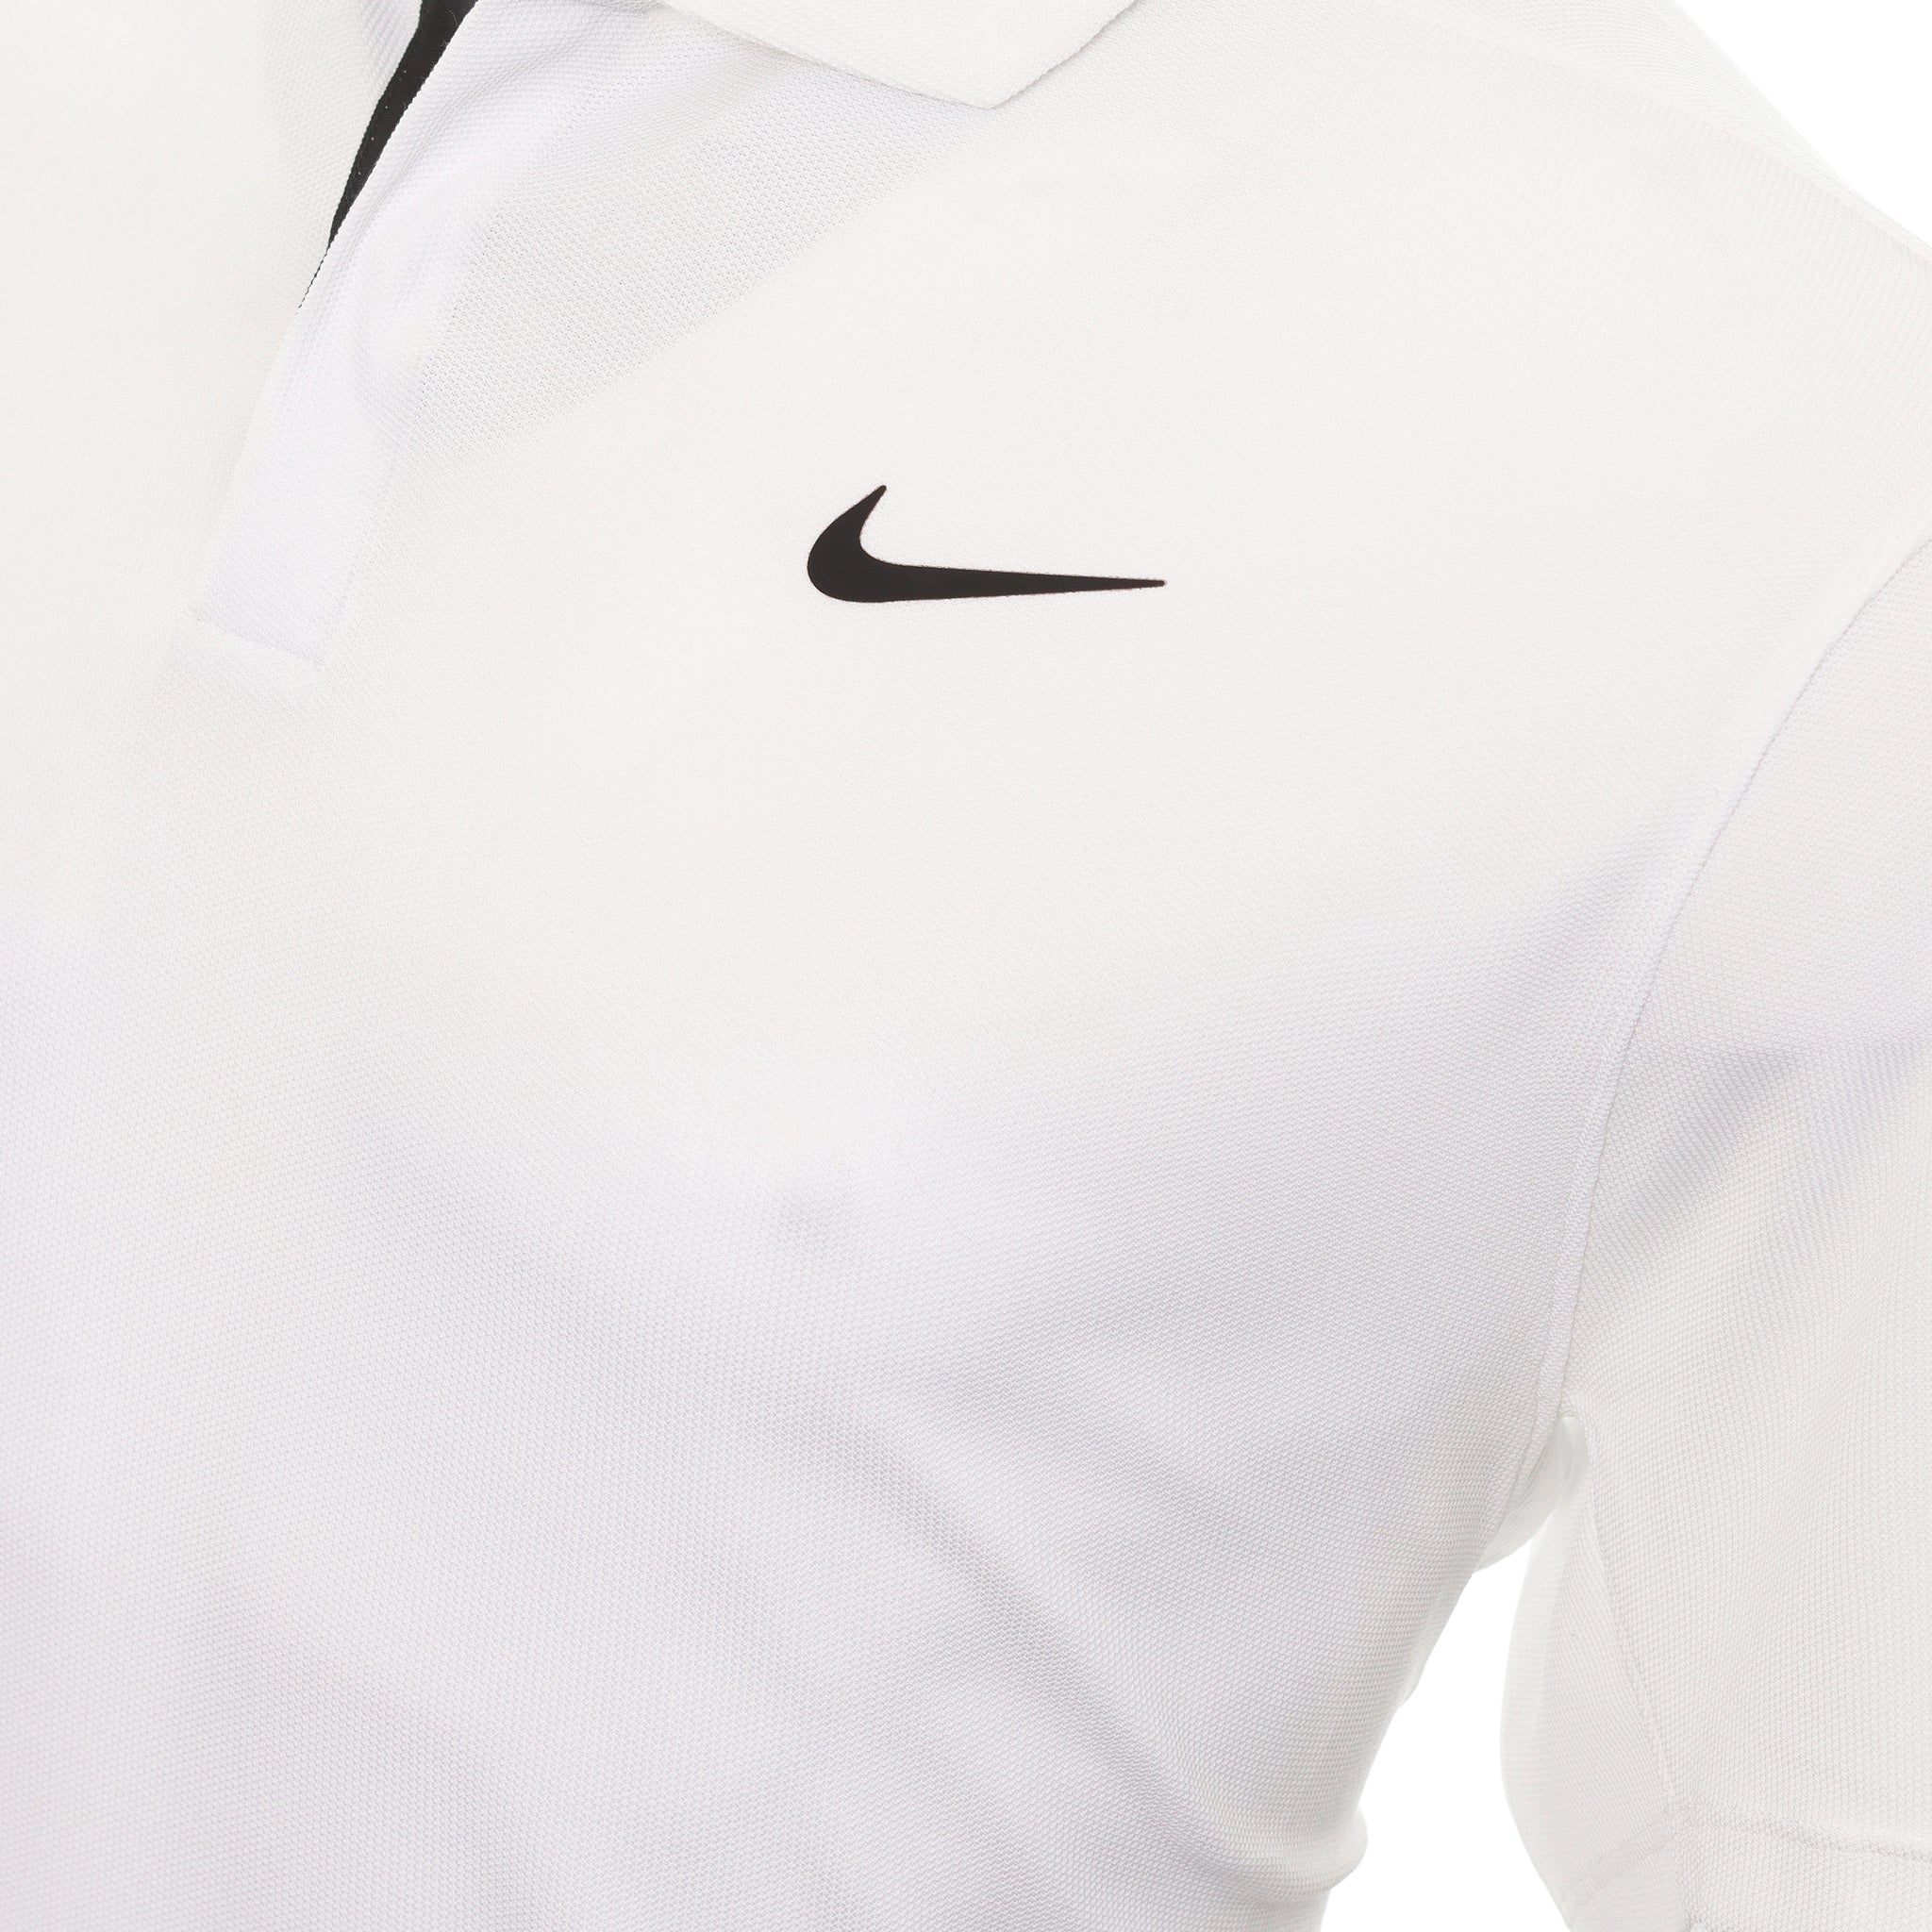 nike-golf-tw-dri-fit-tech-pique-shirt-dr5314-white-100